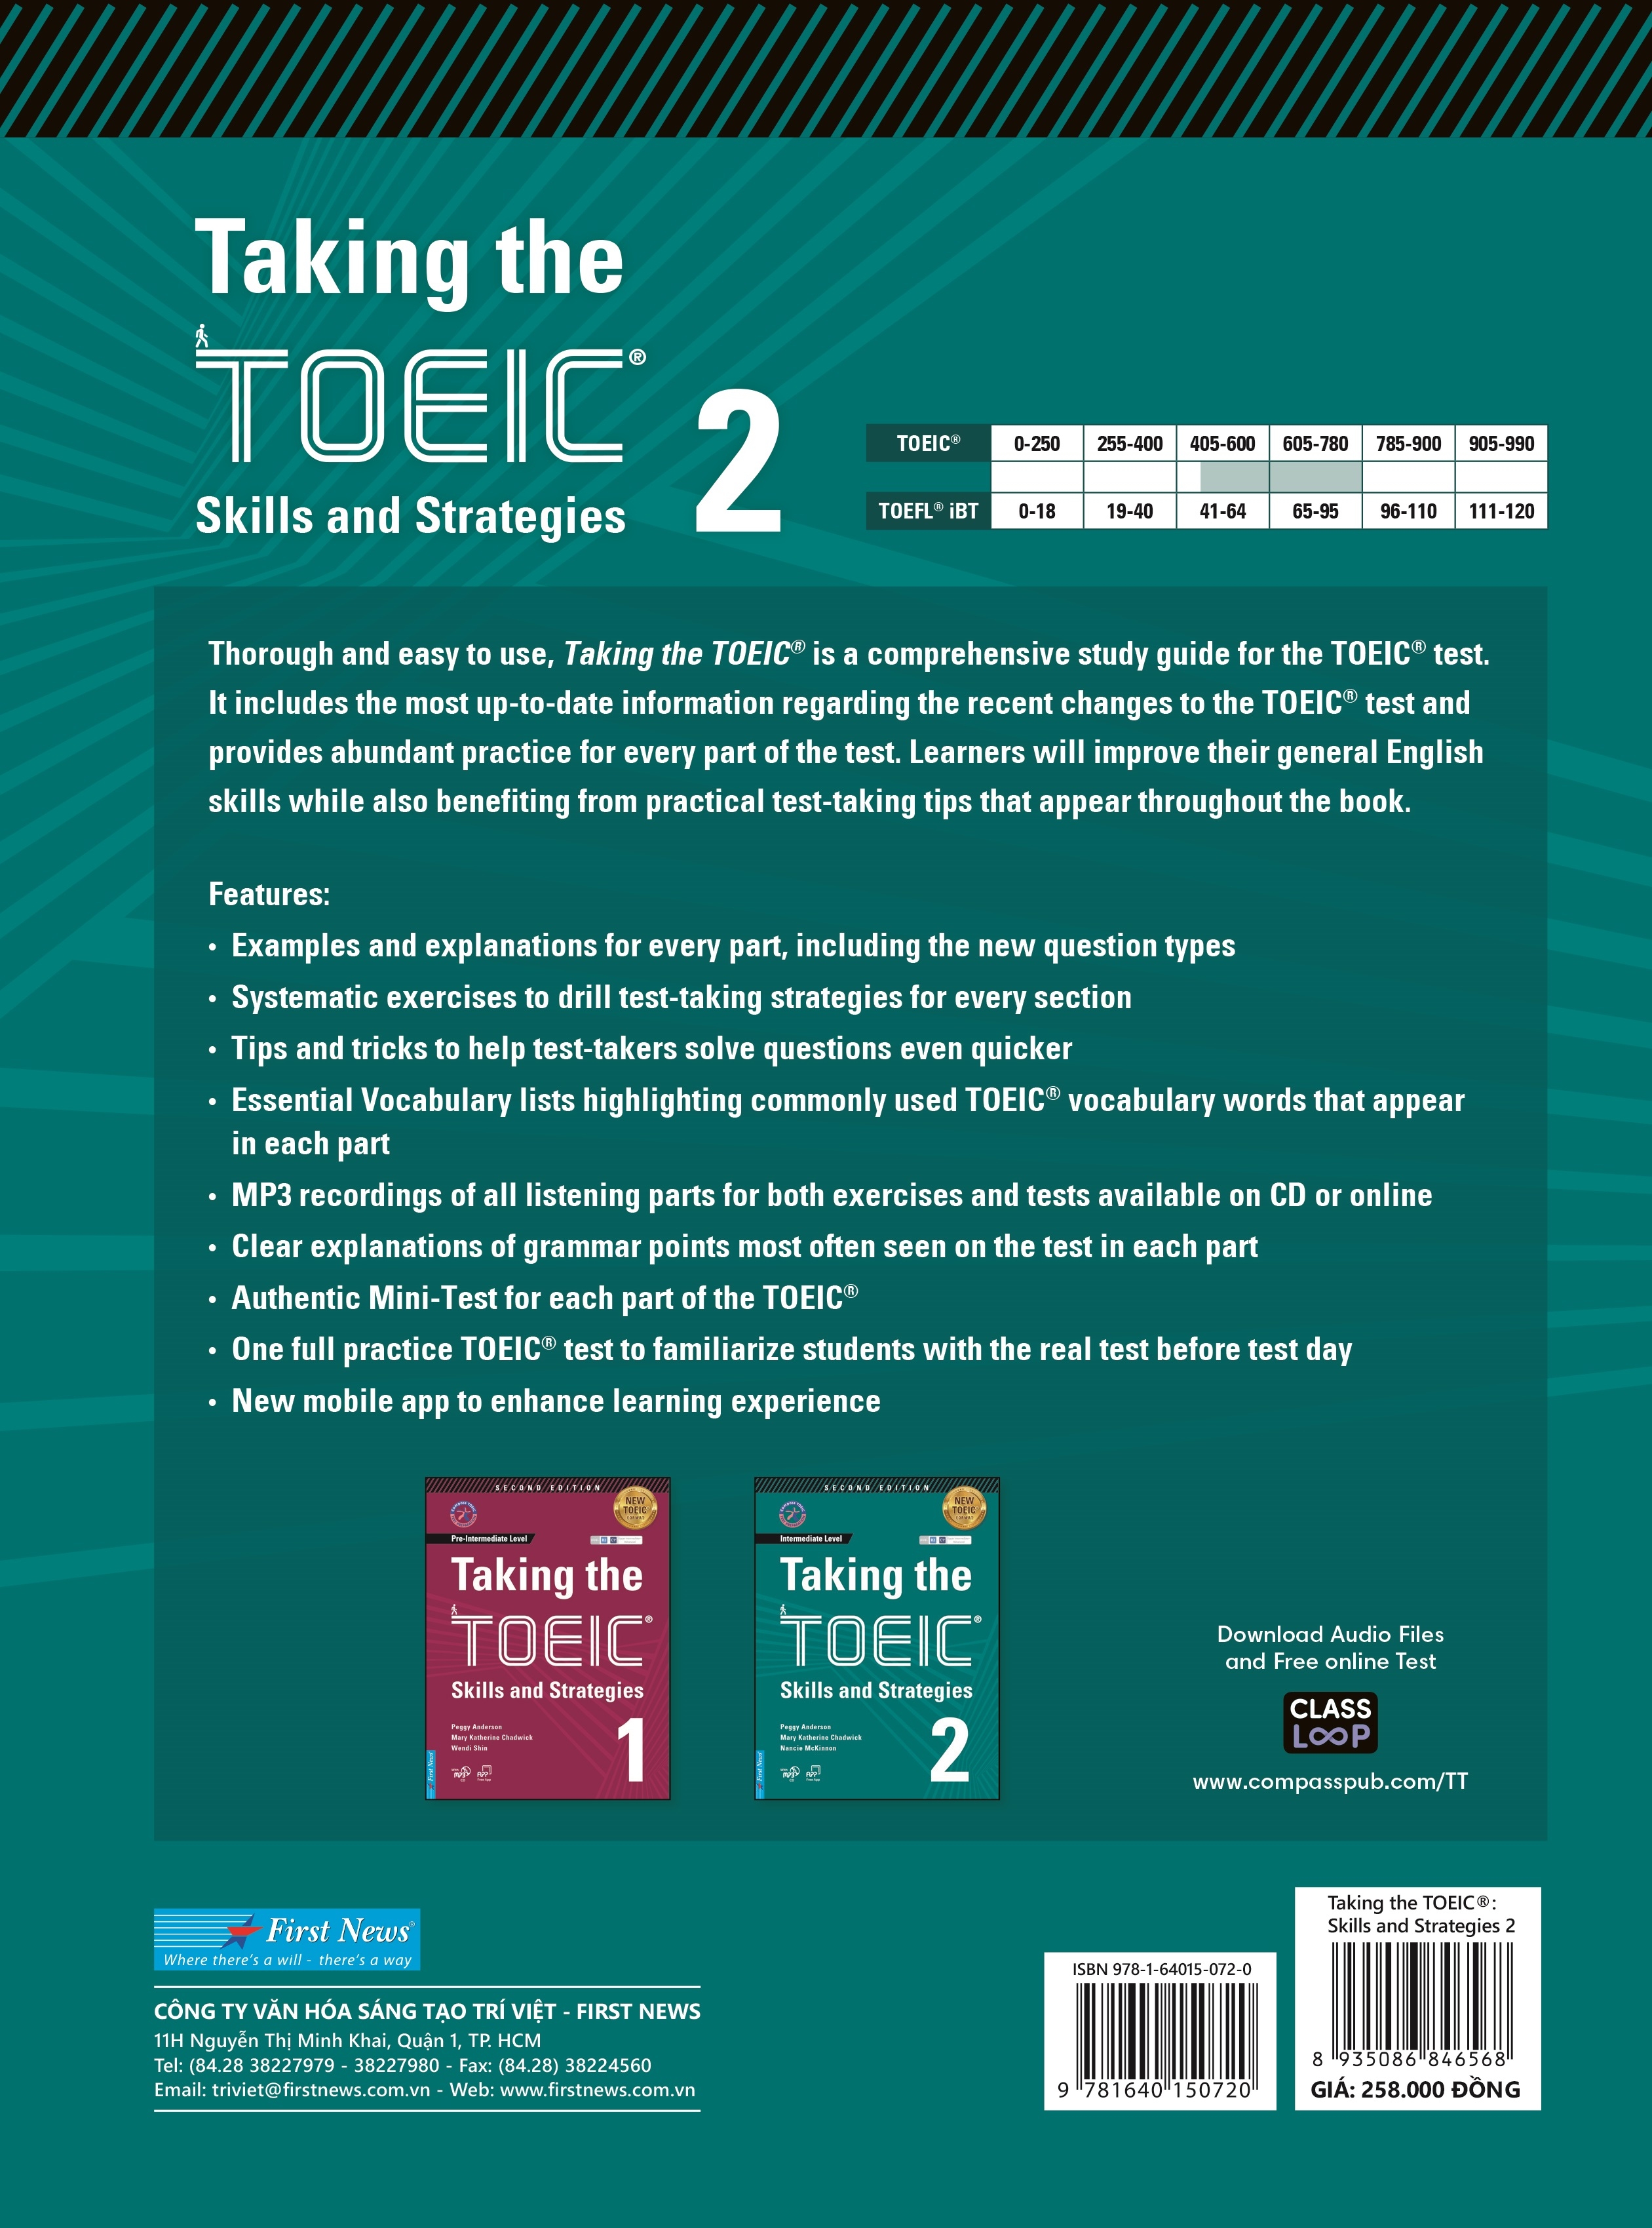 Taking The Toeic Tập 2 - Skills And Strategies PDF